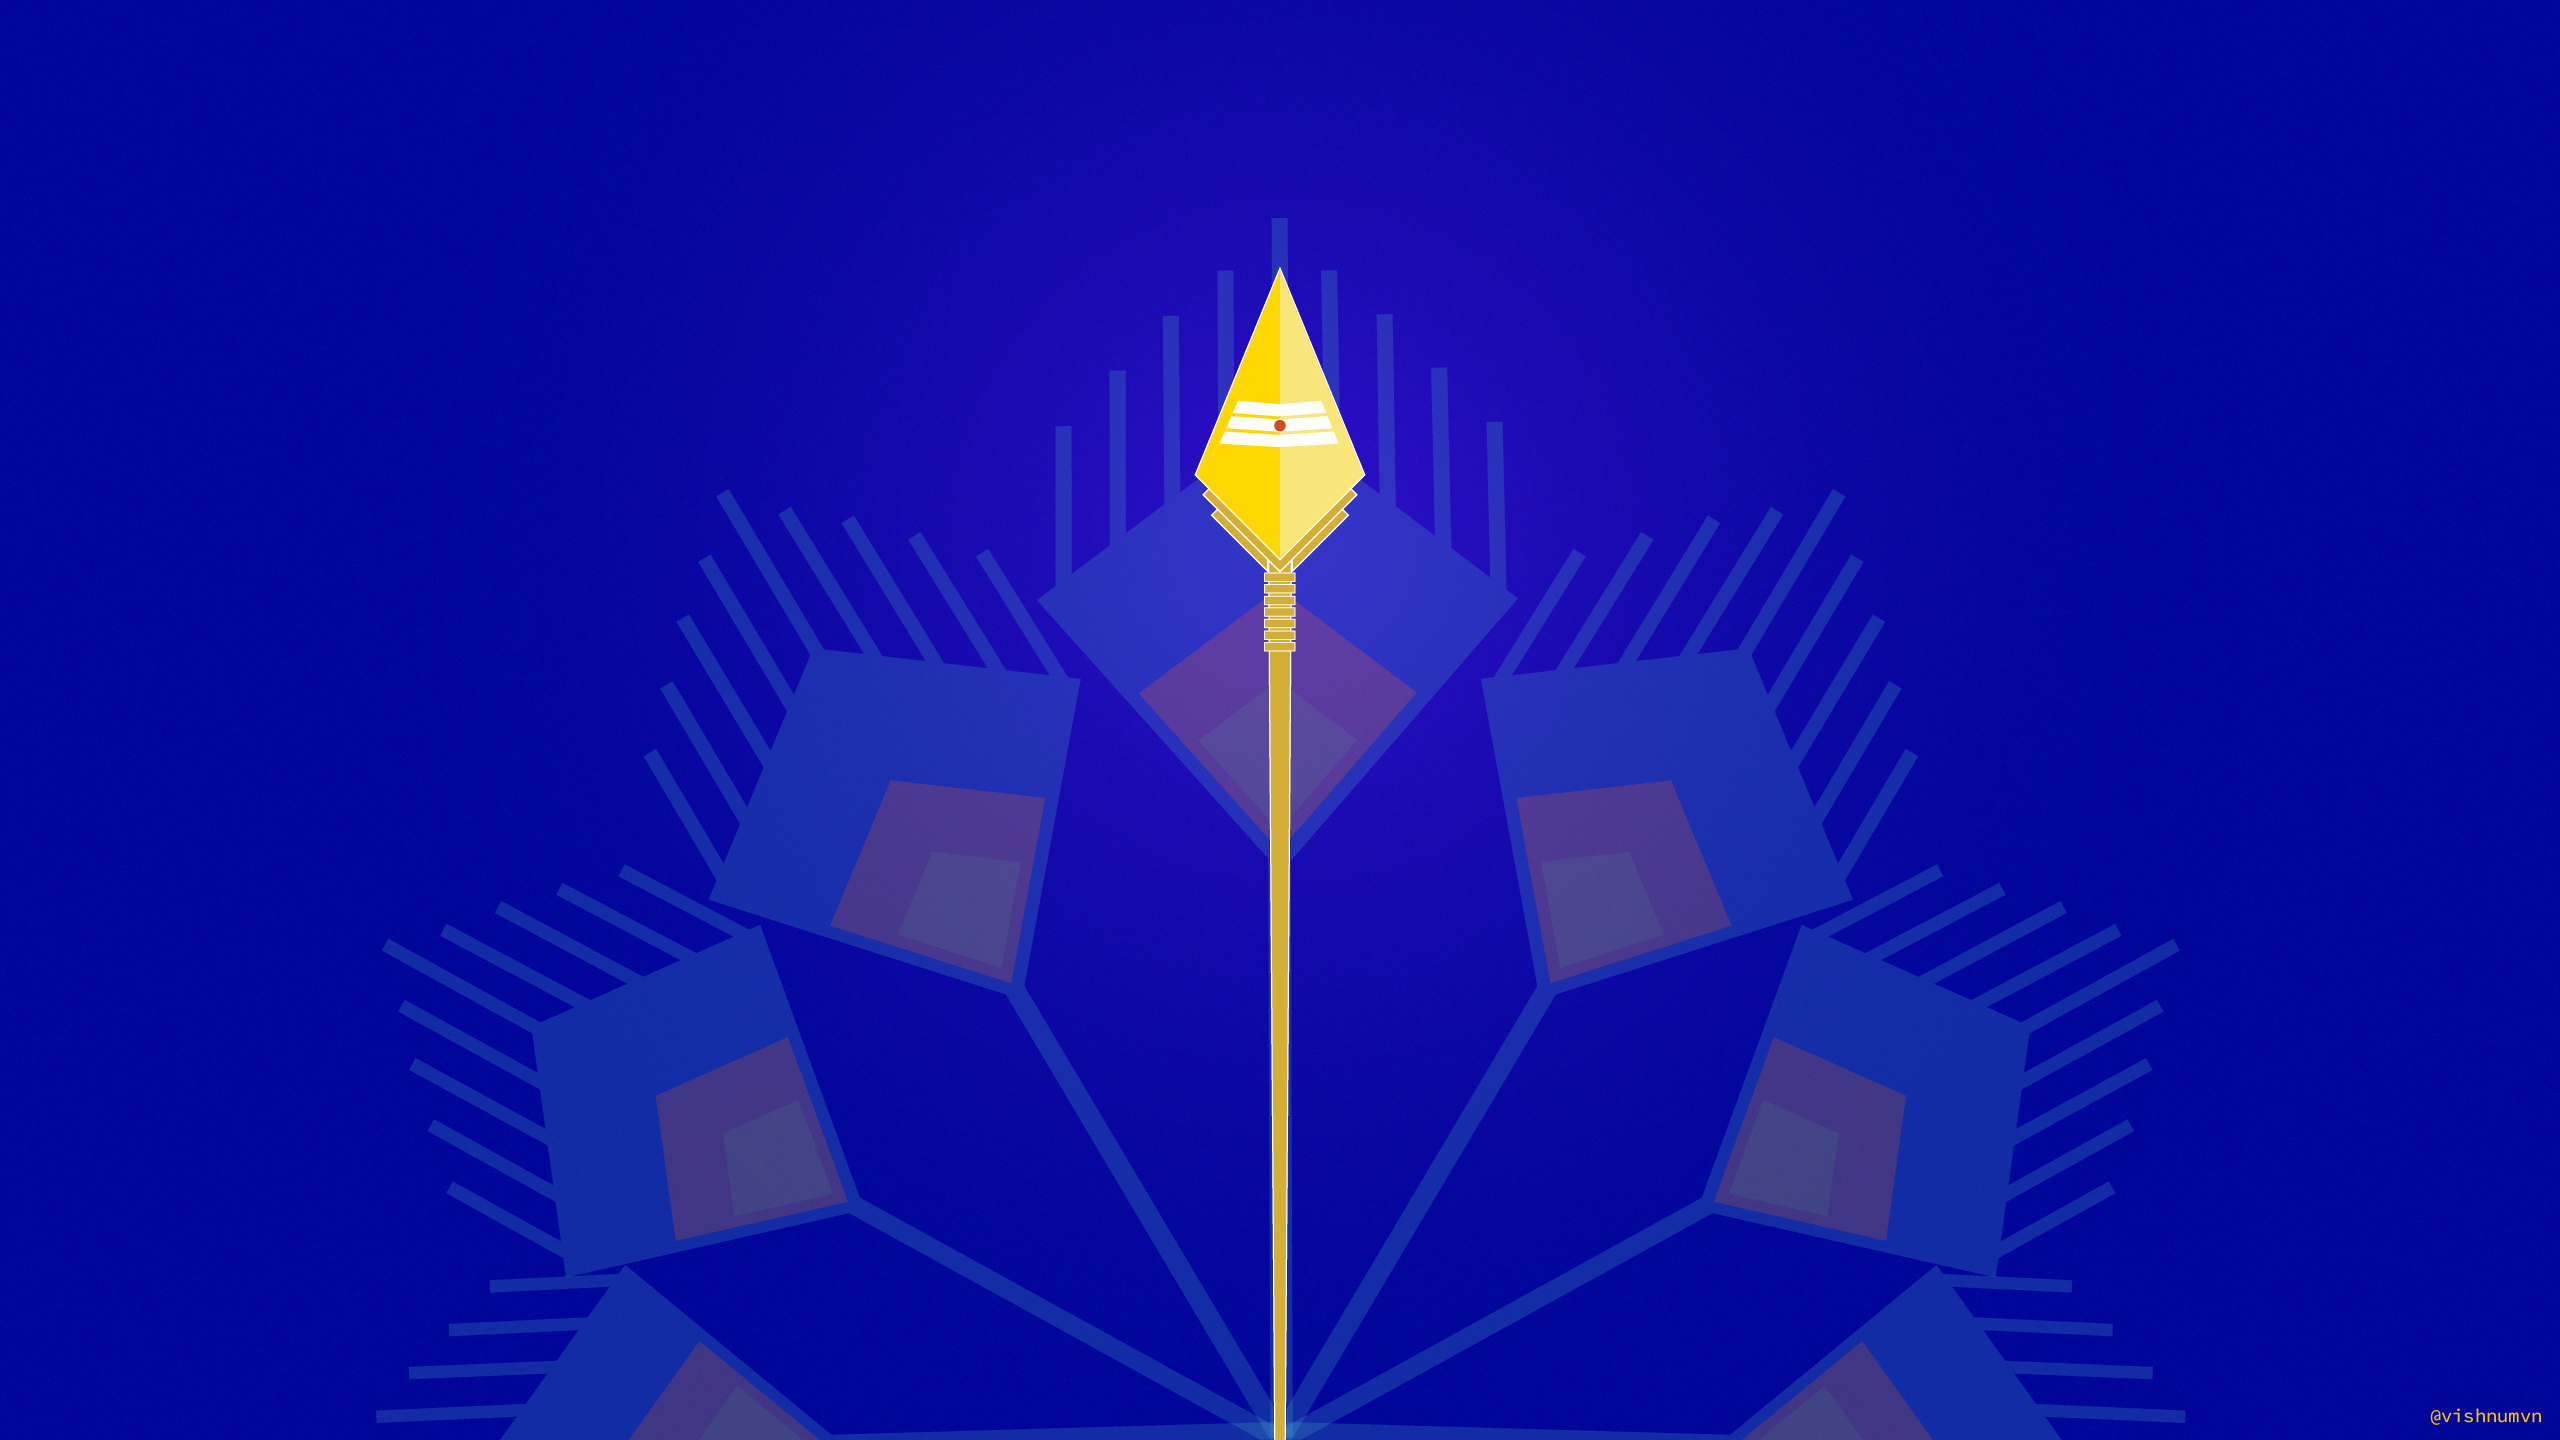 Elegantemporium fabric brand logo in royal blue and golden on Craiyon